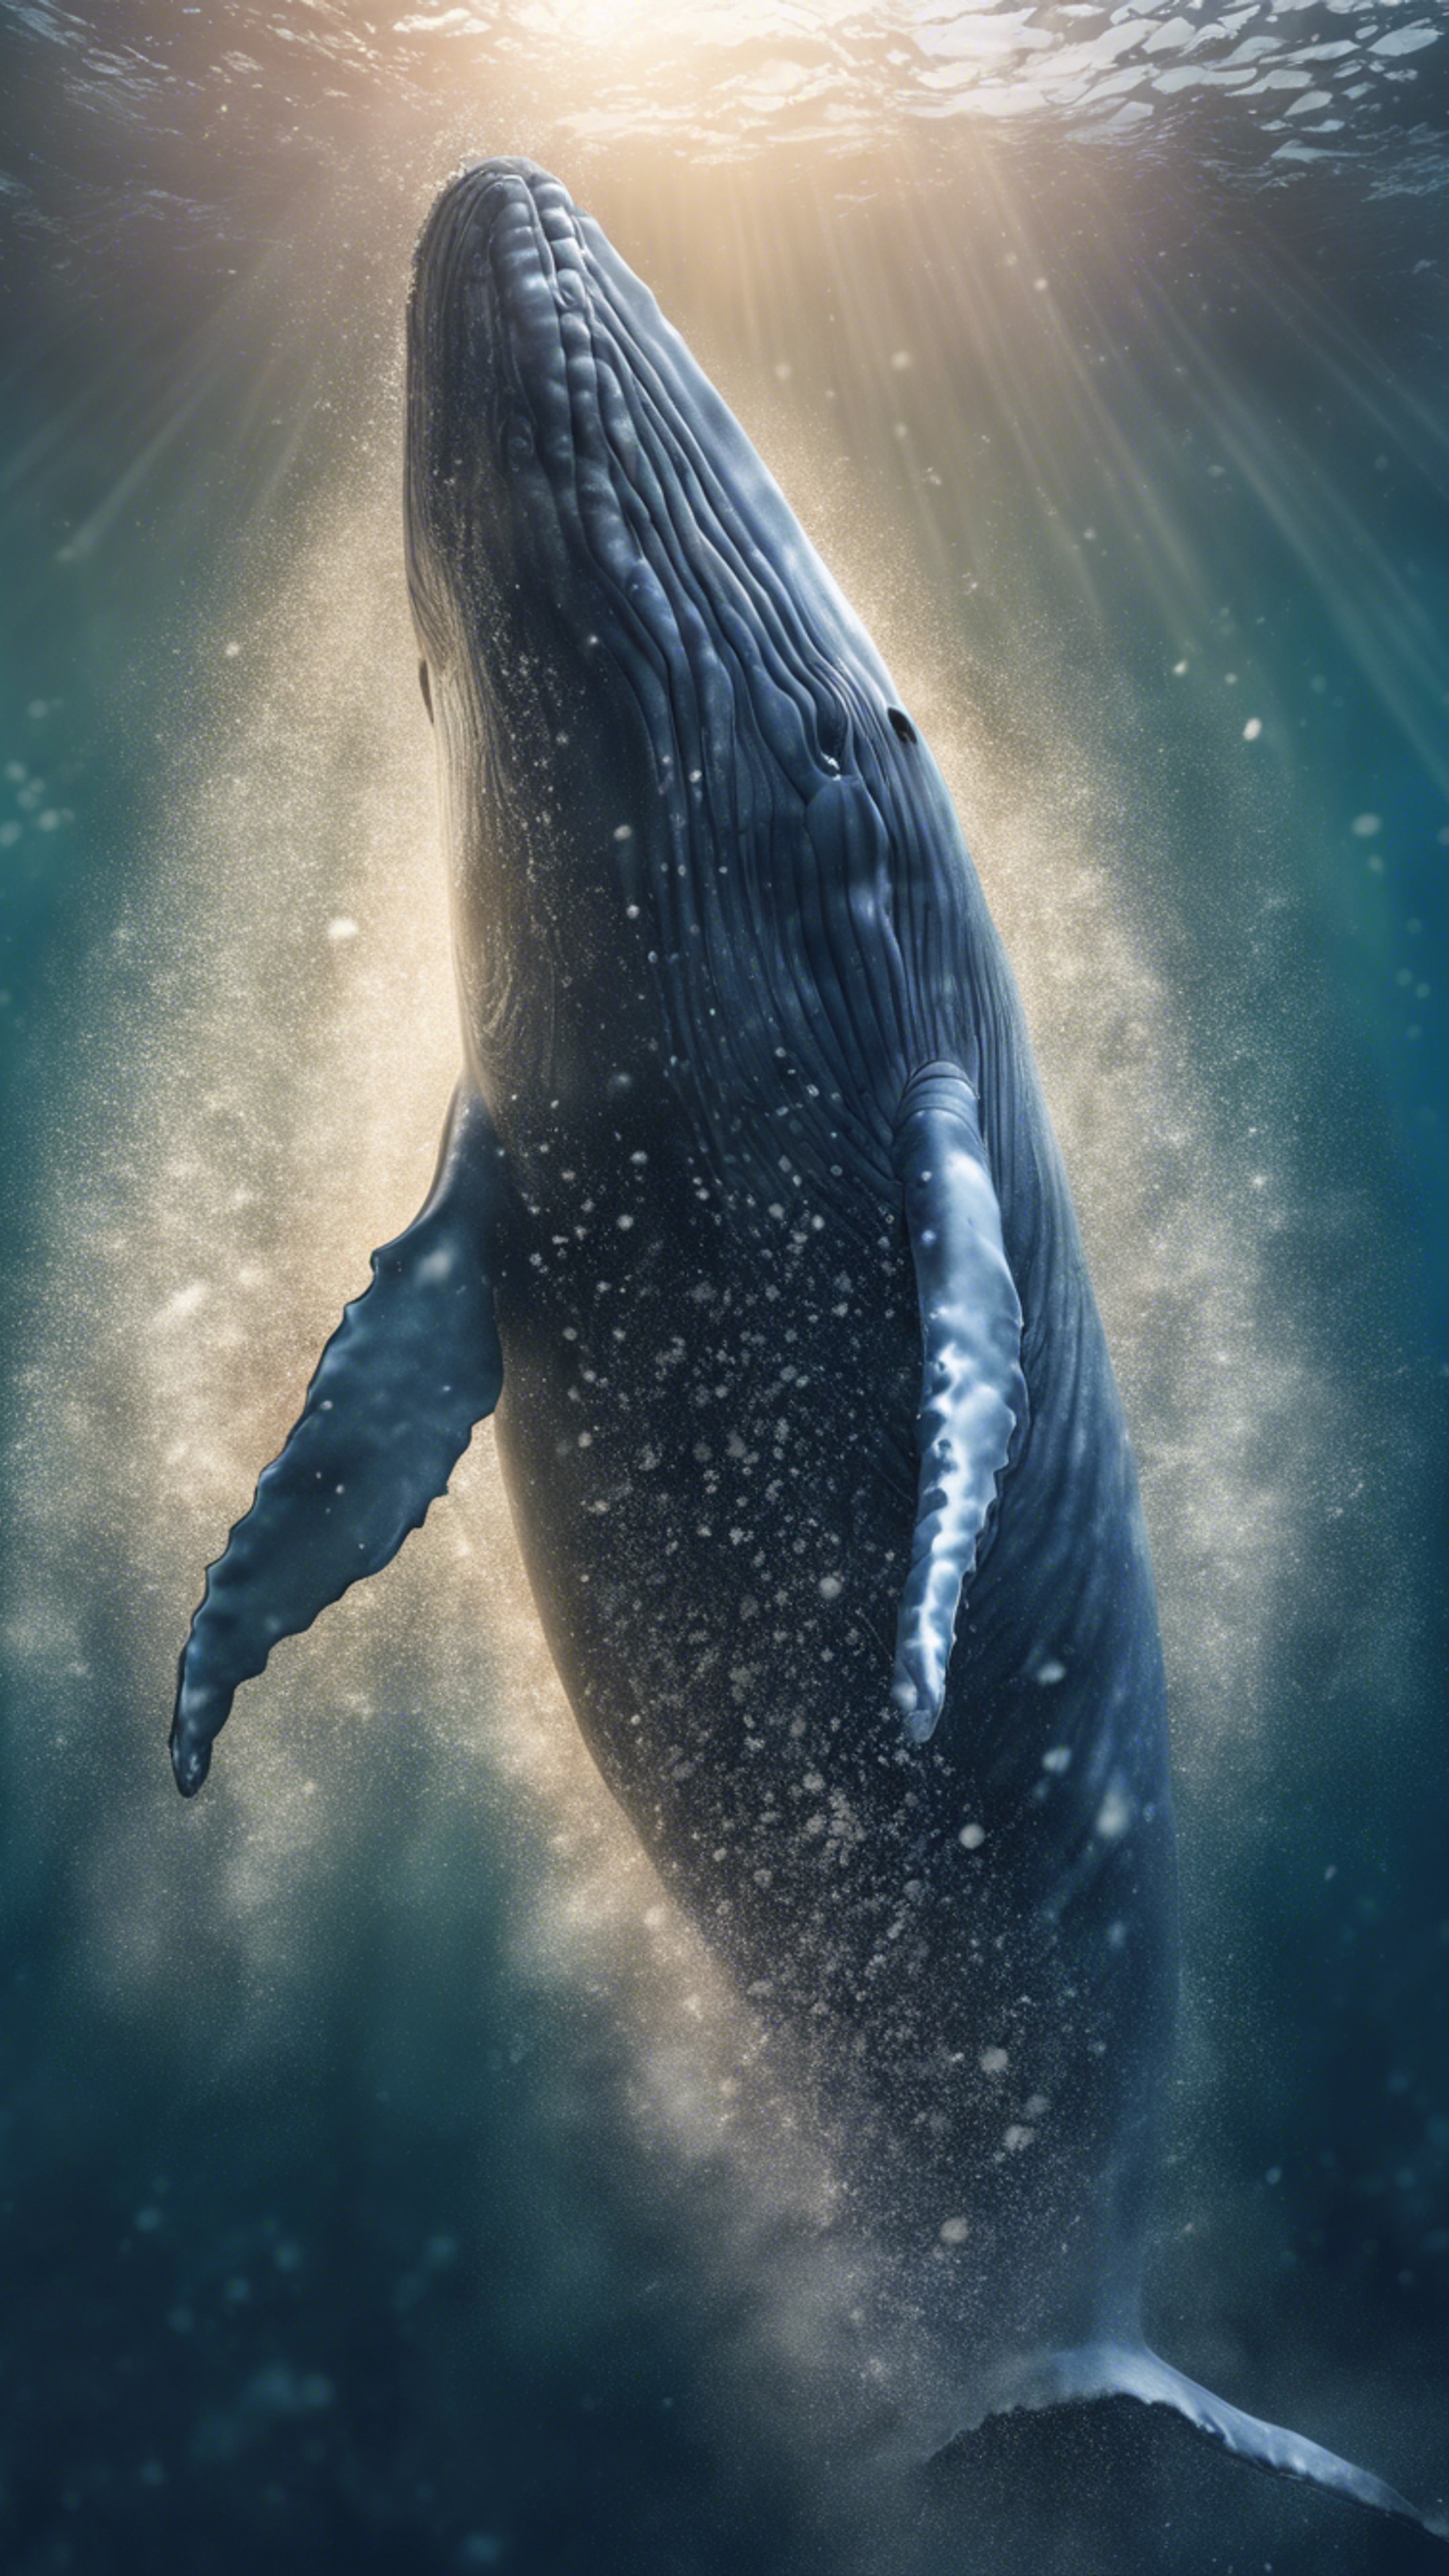 A digital portrait of a majestic sperm whale deep below the ocean waves.壁紙[e5d10afbe32a416ca5b5]